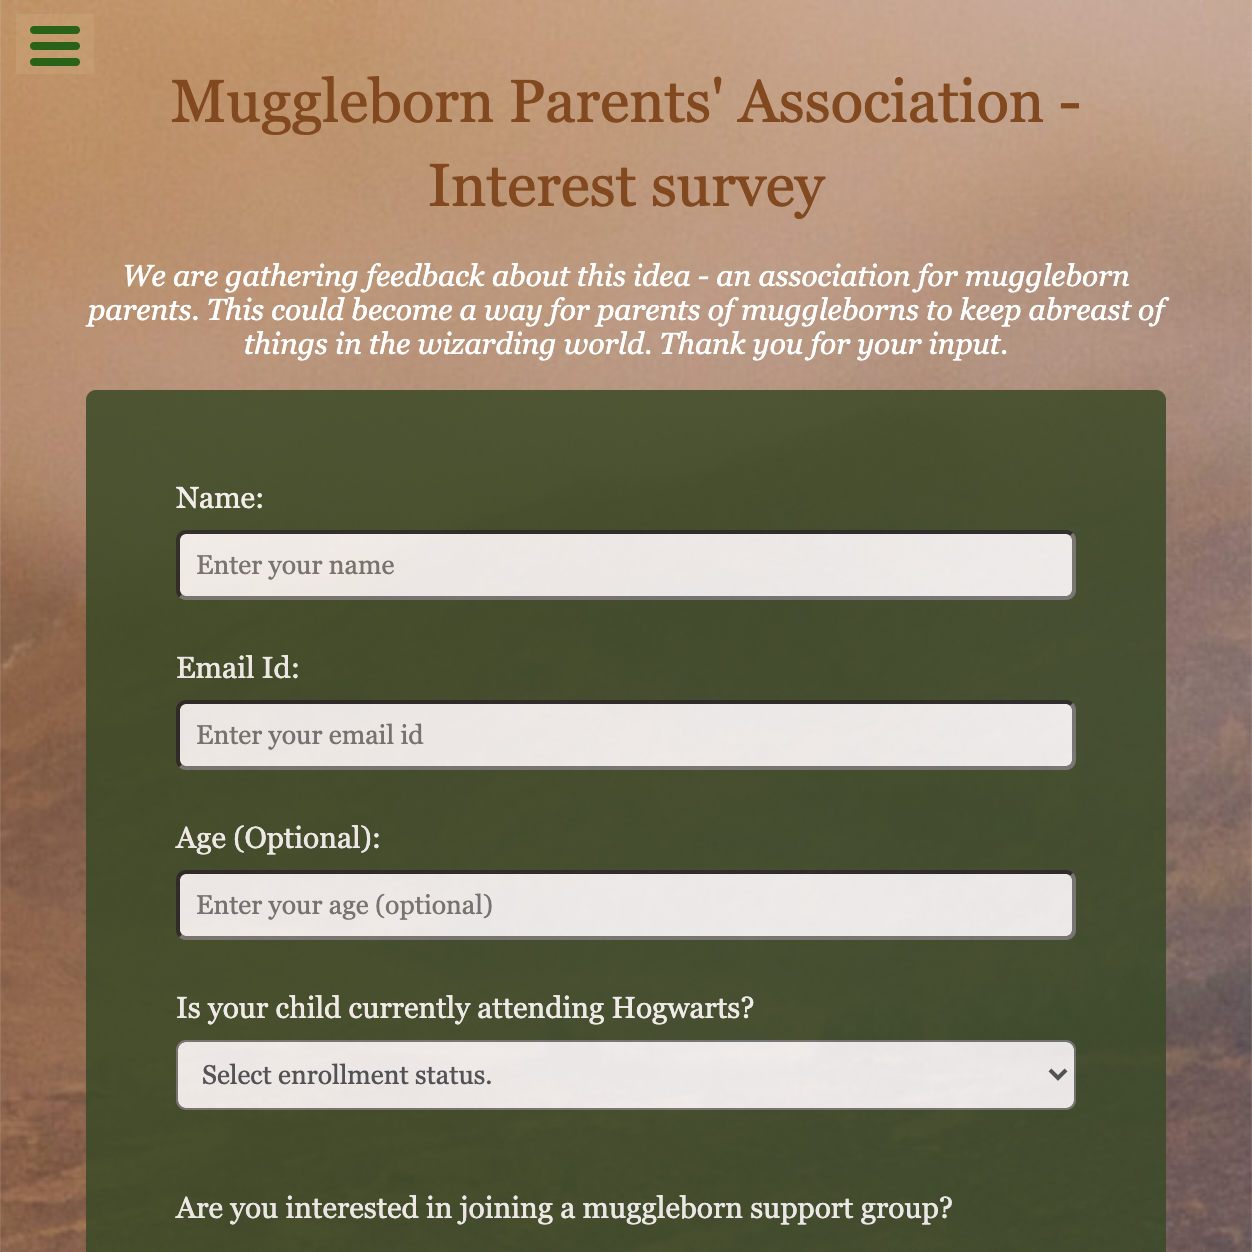 survey-form